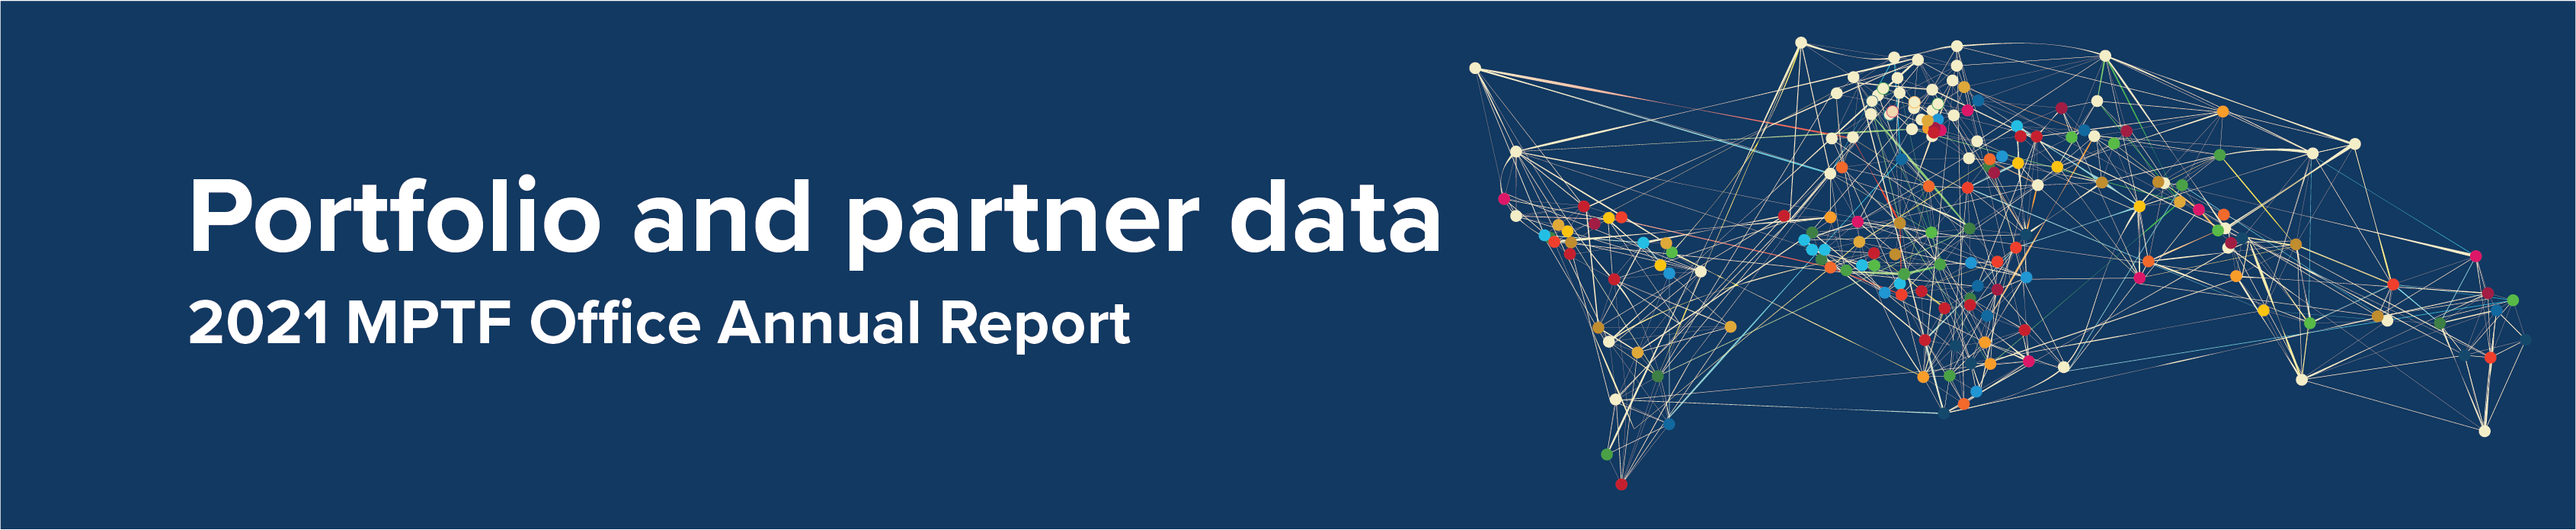 AR 2021 banner portfolio and partner data